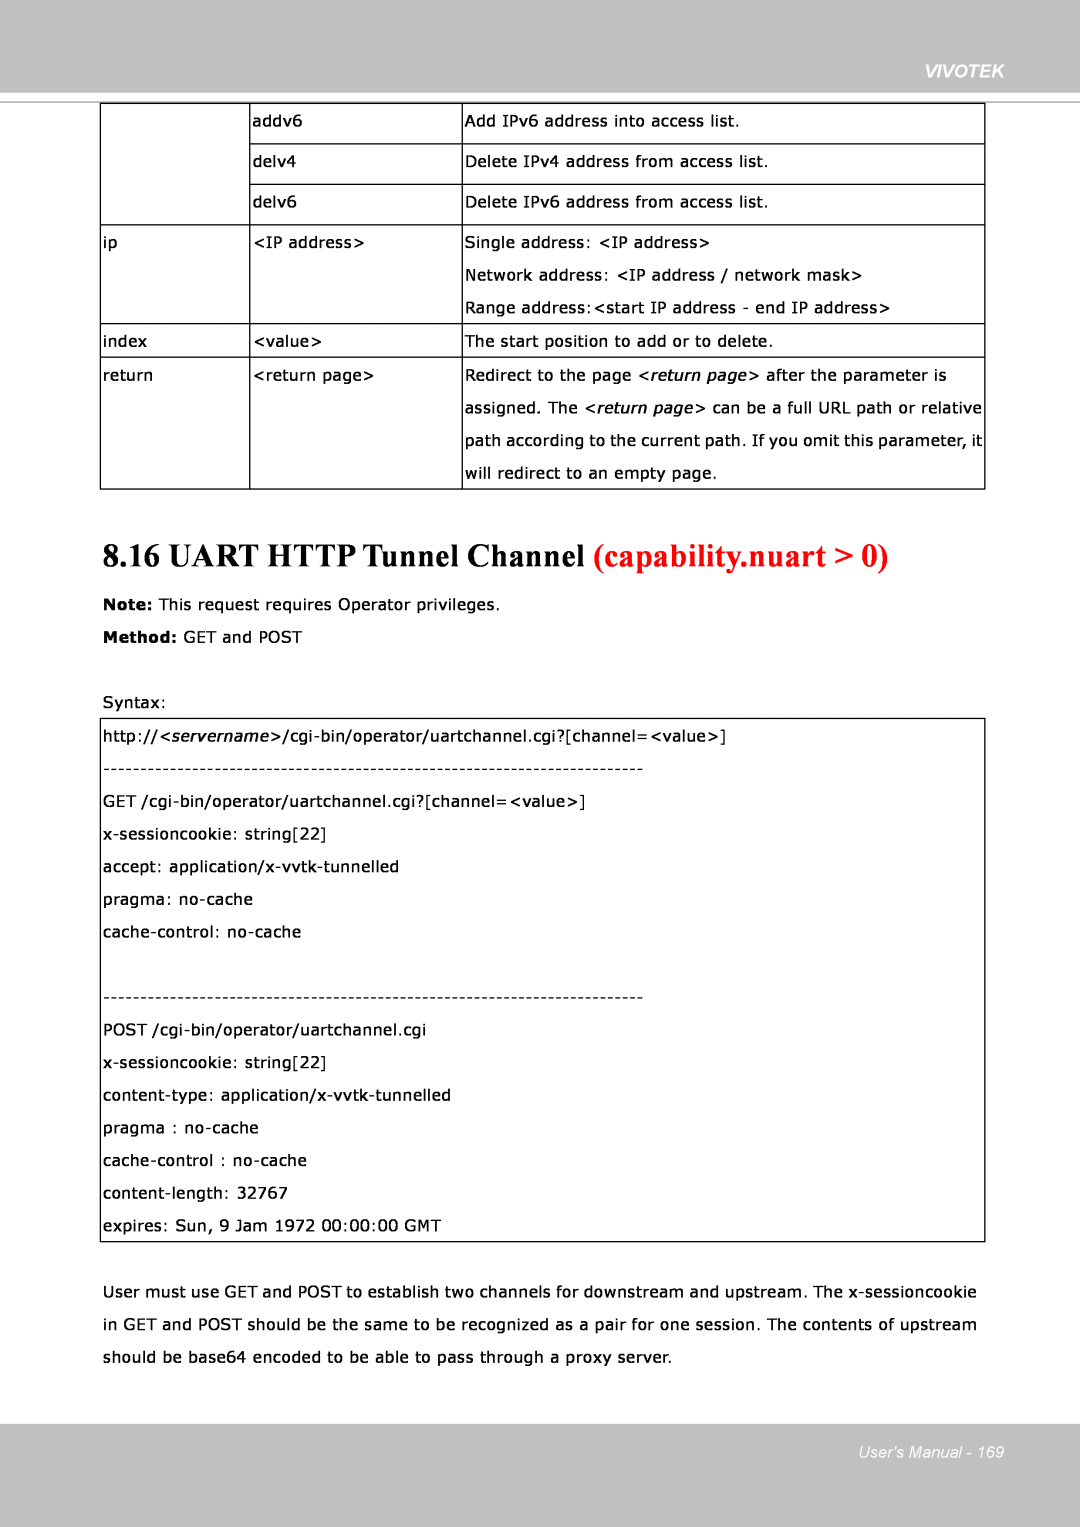 Vivotek IP8352 manual UART HTTP Tunnel Channel capability.nuart >, Vivotek 